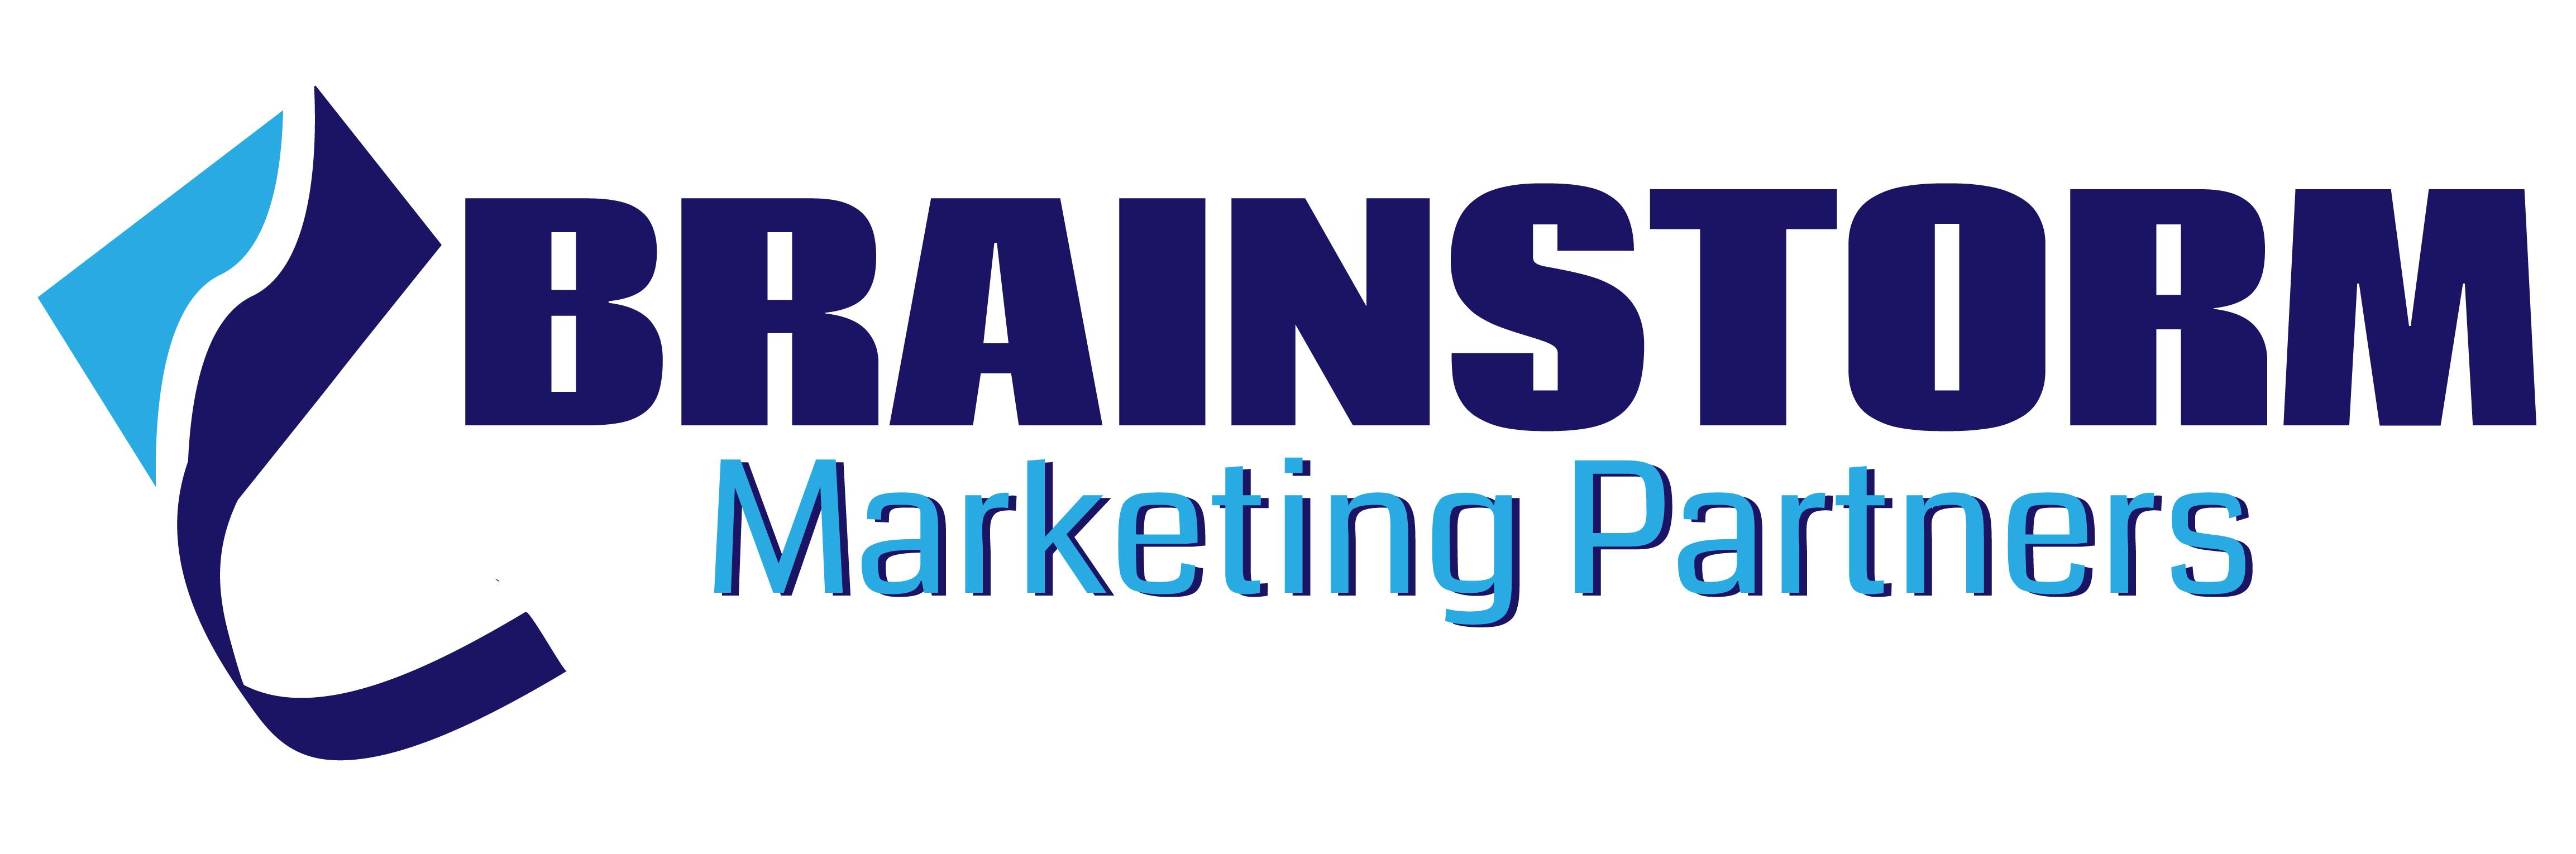 Brainstorm Marketing Partners Logo